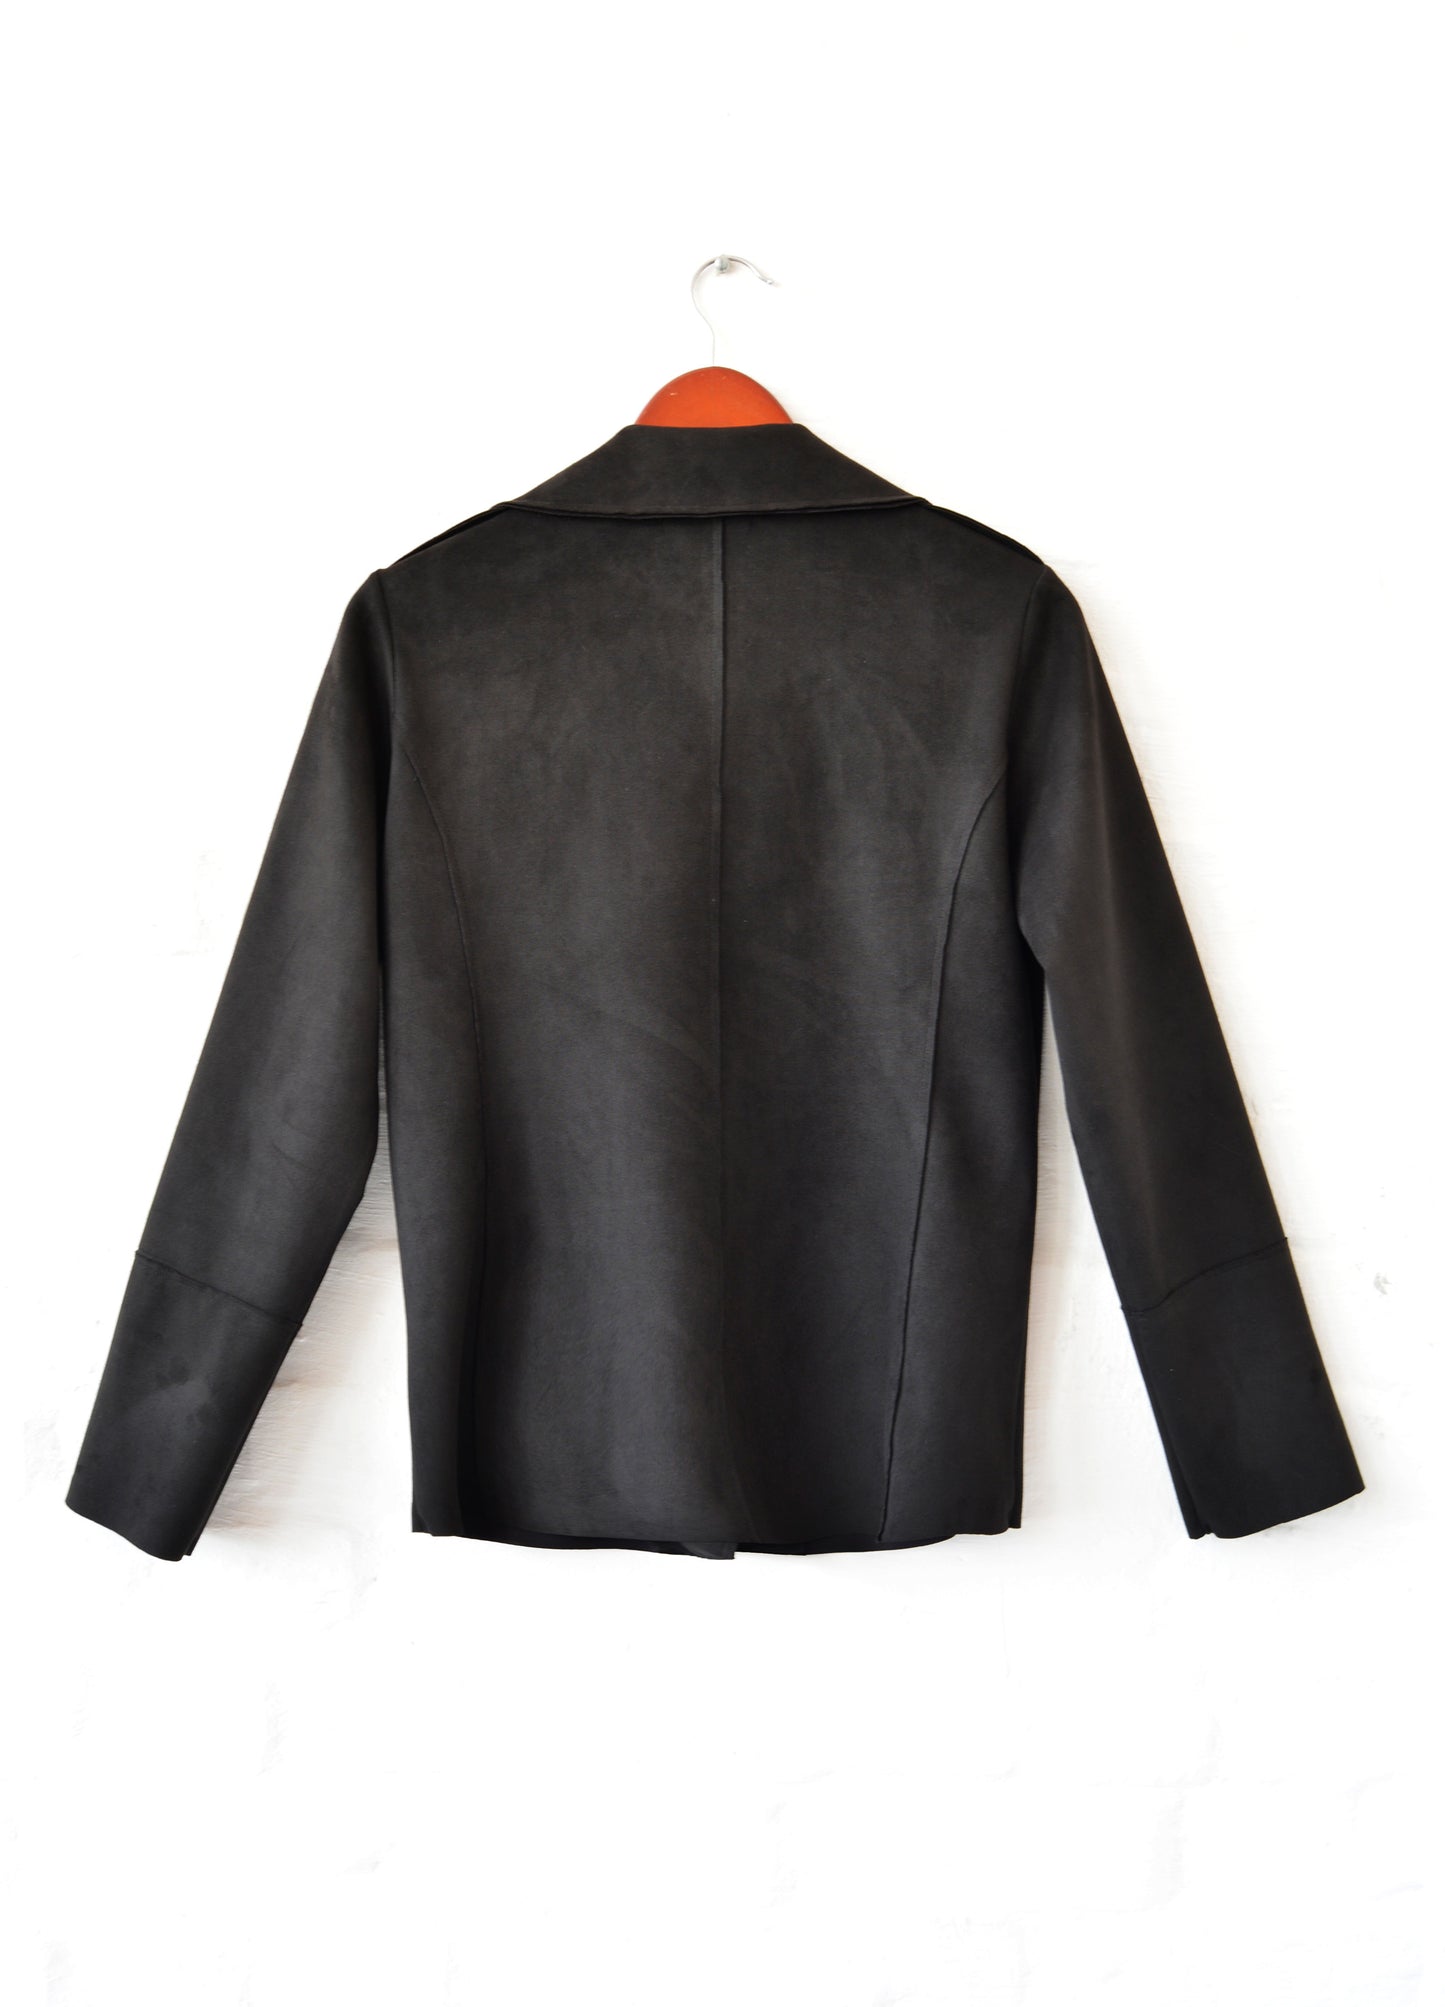 Ryleigh biker jacket in Black